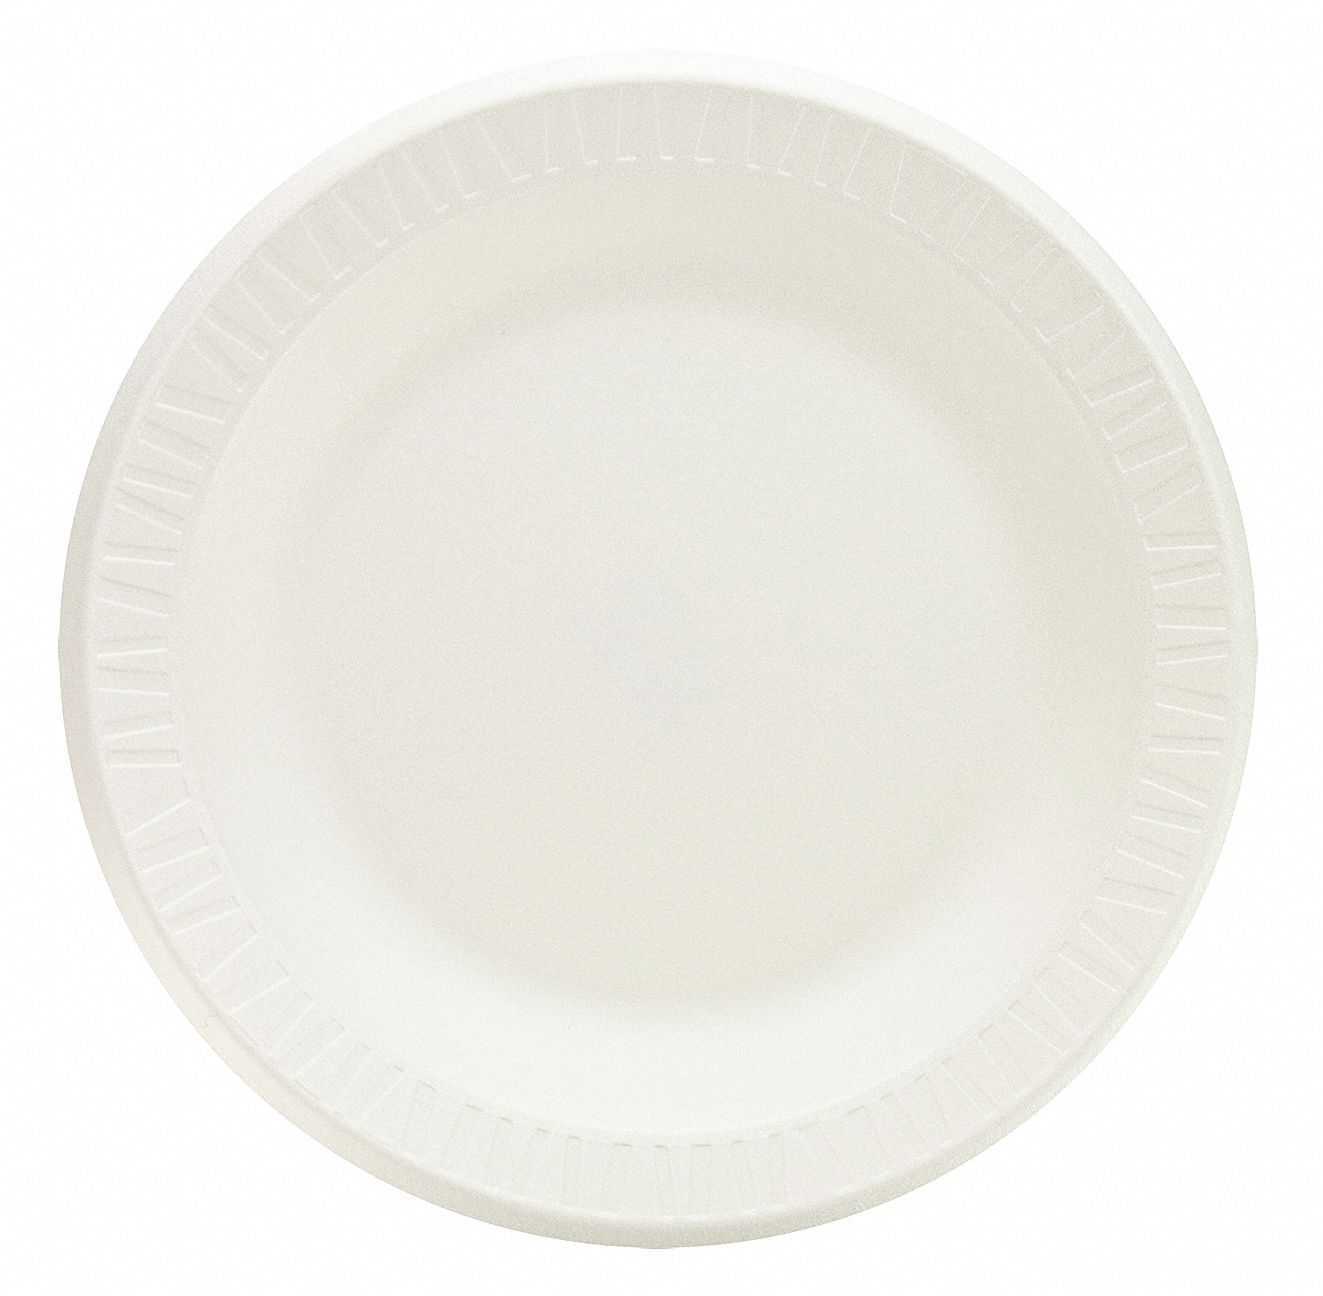 13E896 - Foam Plate Round 10 White PK500